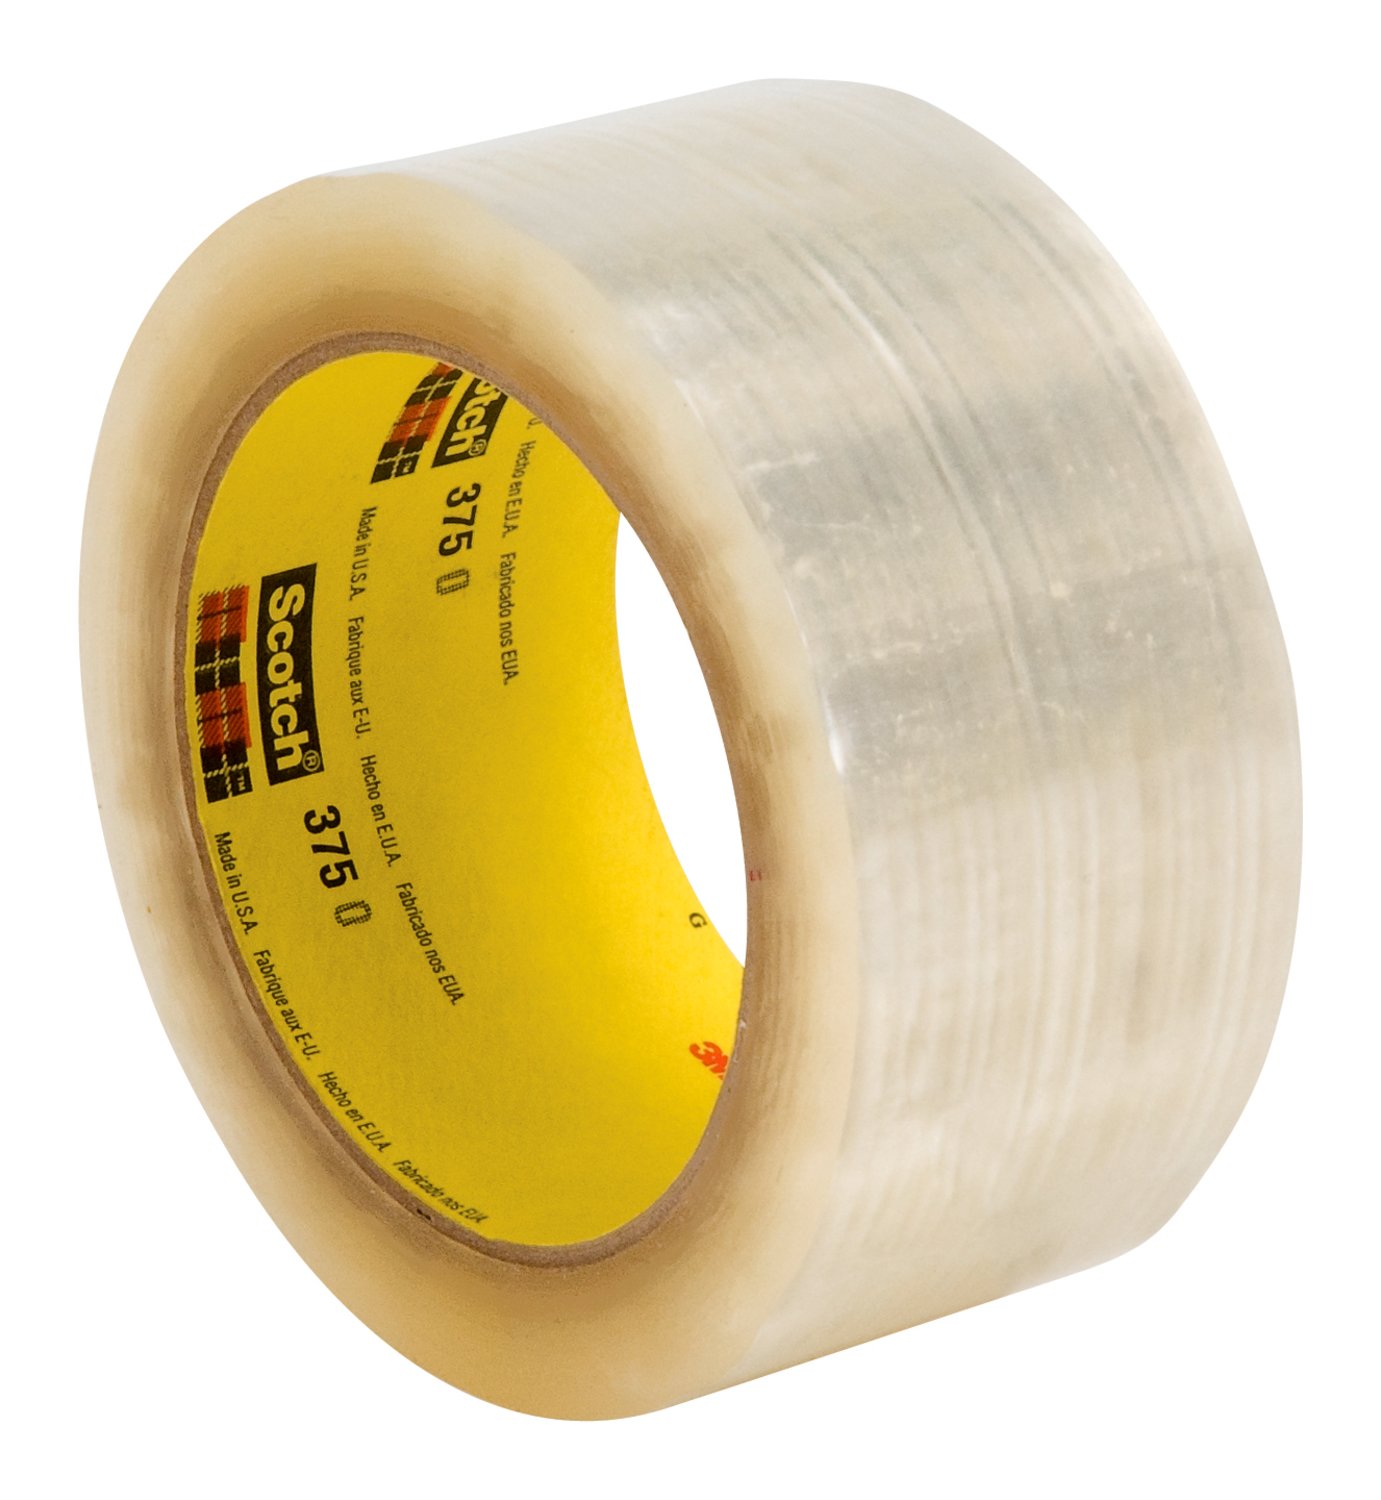 7100176716 - Scotch Custom Printed Box Sealing Tape 375CP, White, 48 mm x 50 m,
36/Case